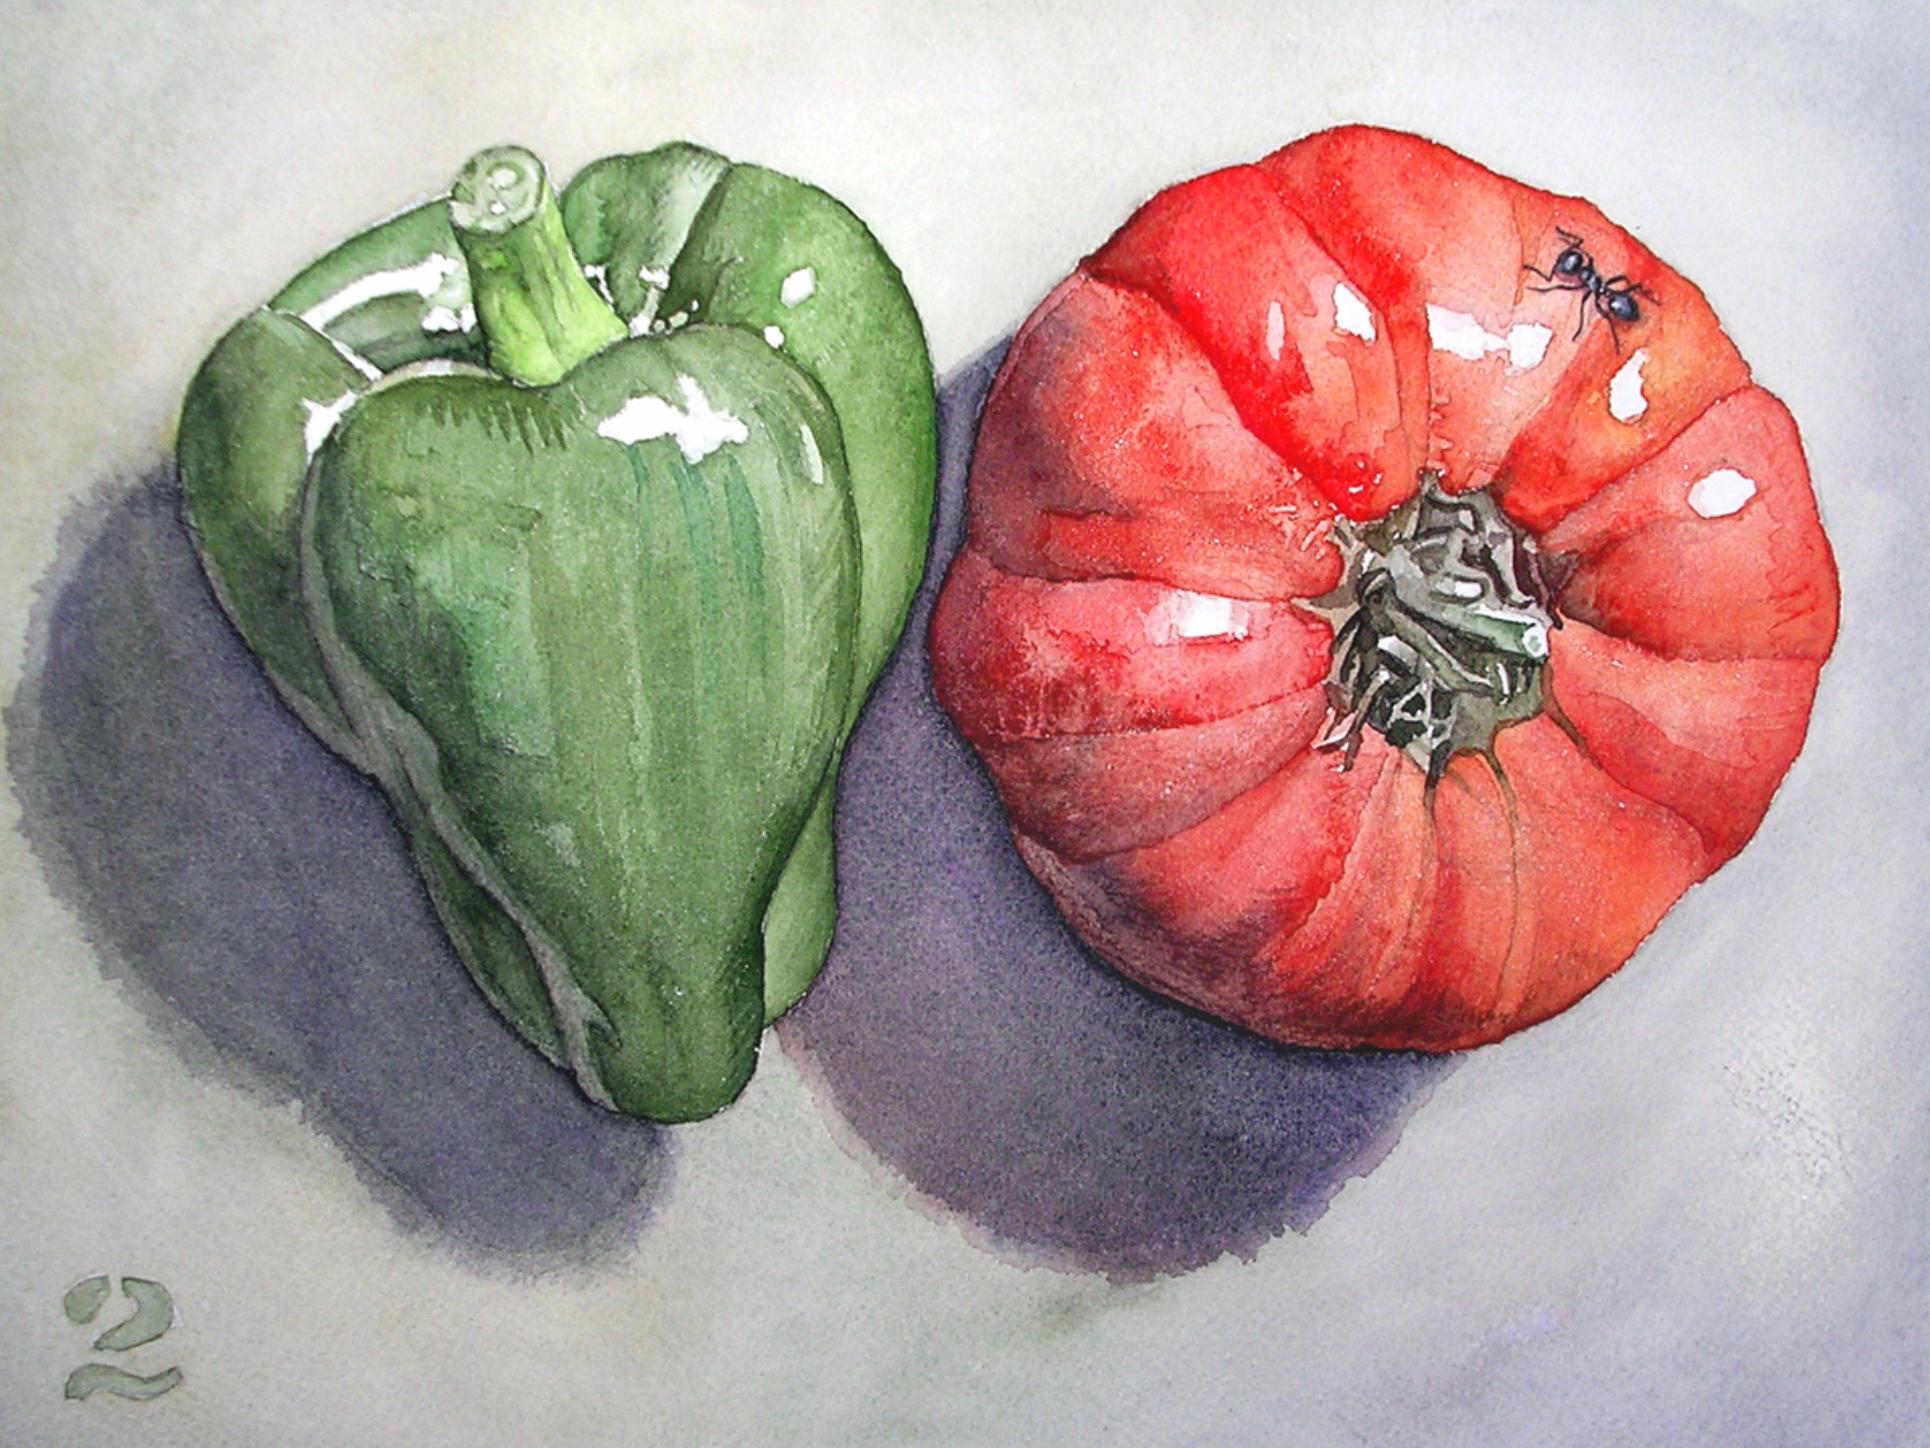 George Mauersberger Figurative Art - Vegetable Still Life No. 2, Contemporary watercolor by Ohio trompe l'oeil artist